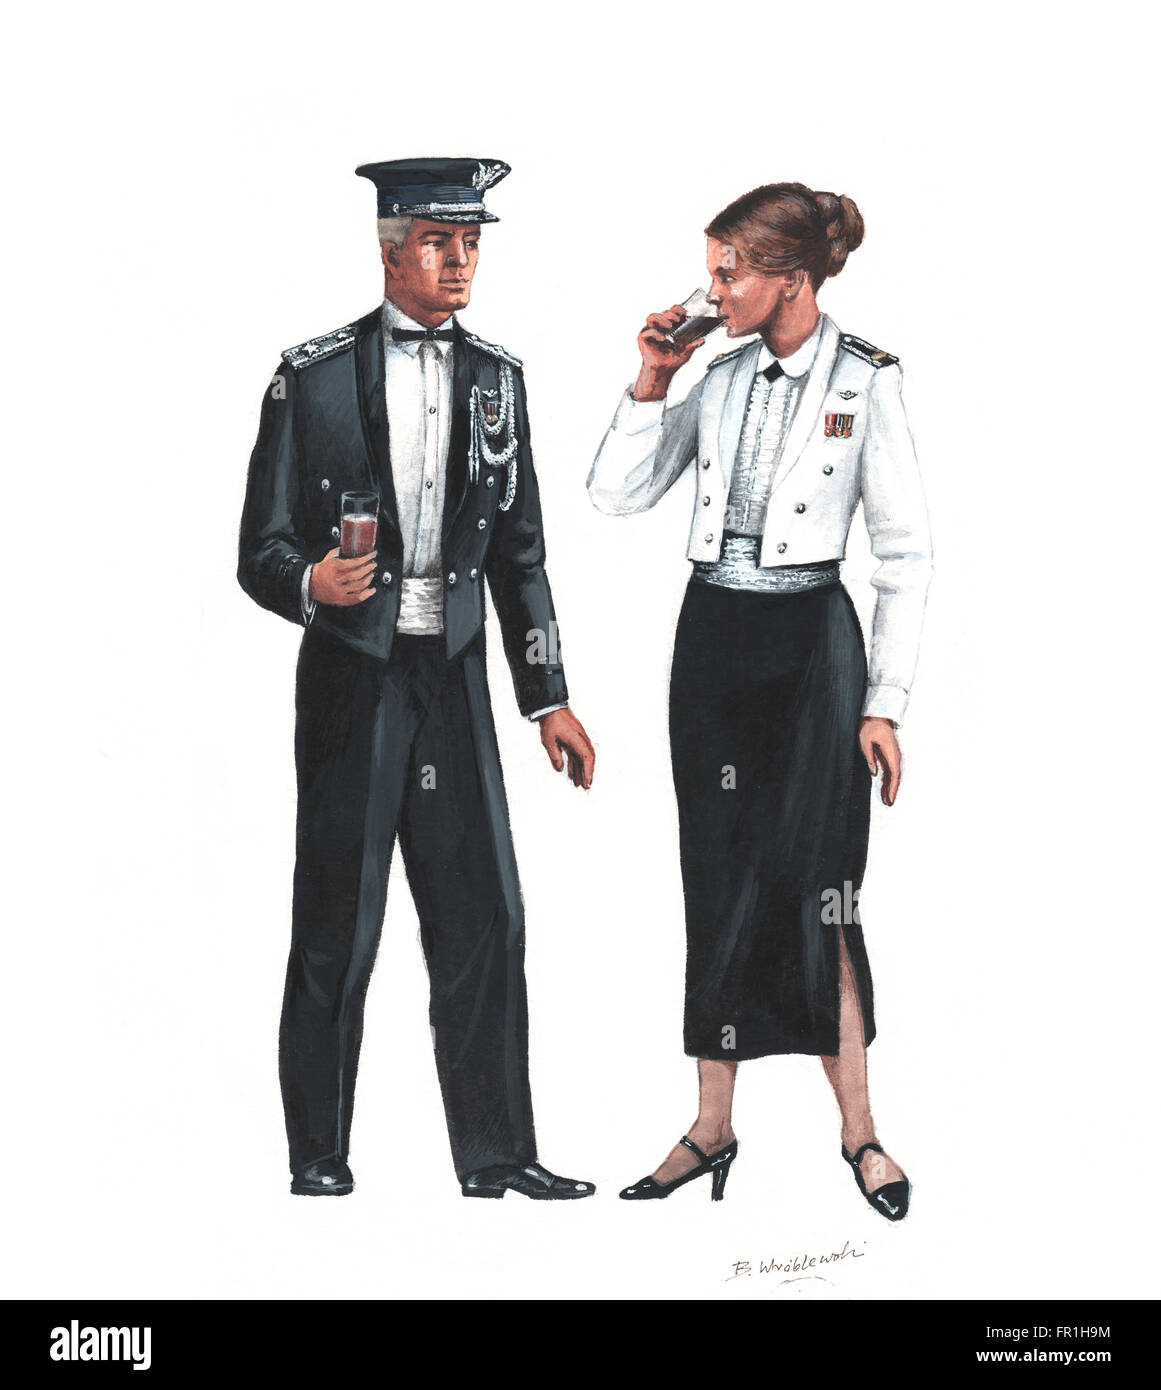 Illustration of American uniforms by Bohdan Wroblewski Stock Photo